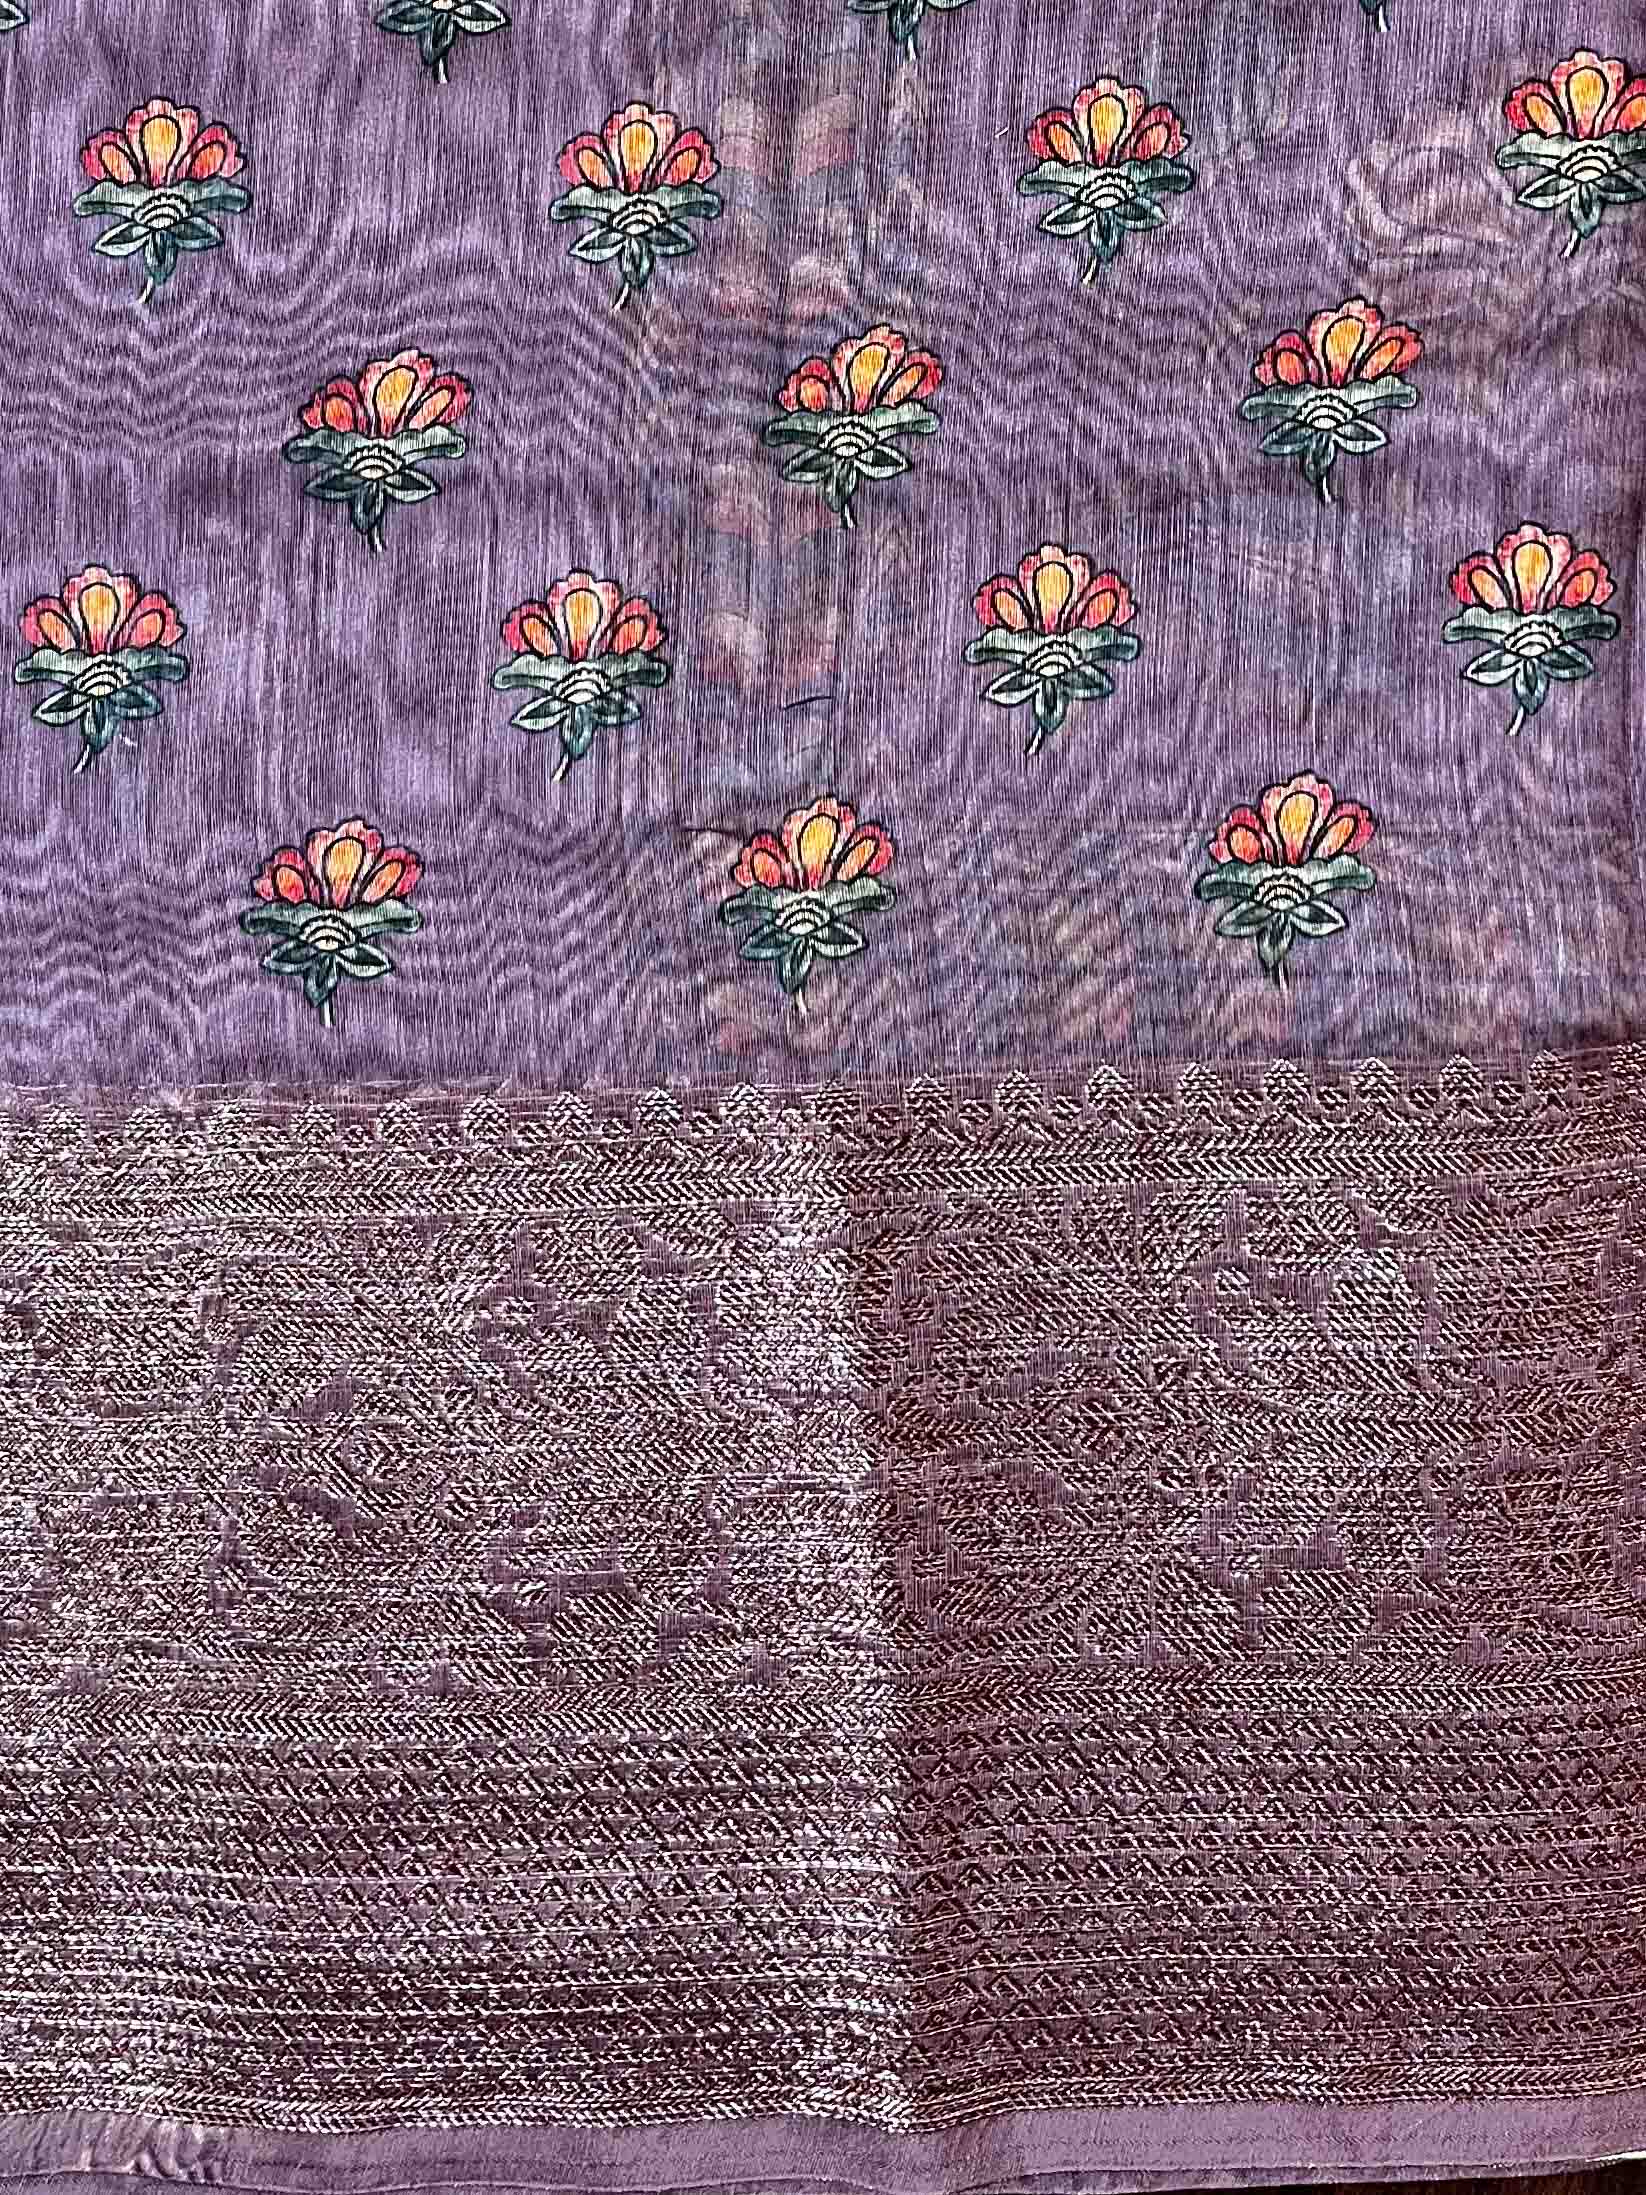 Banarasee Handloom Chanderi Digital Print Saree With Antique Zari Design-Purple